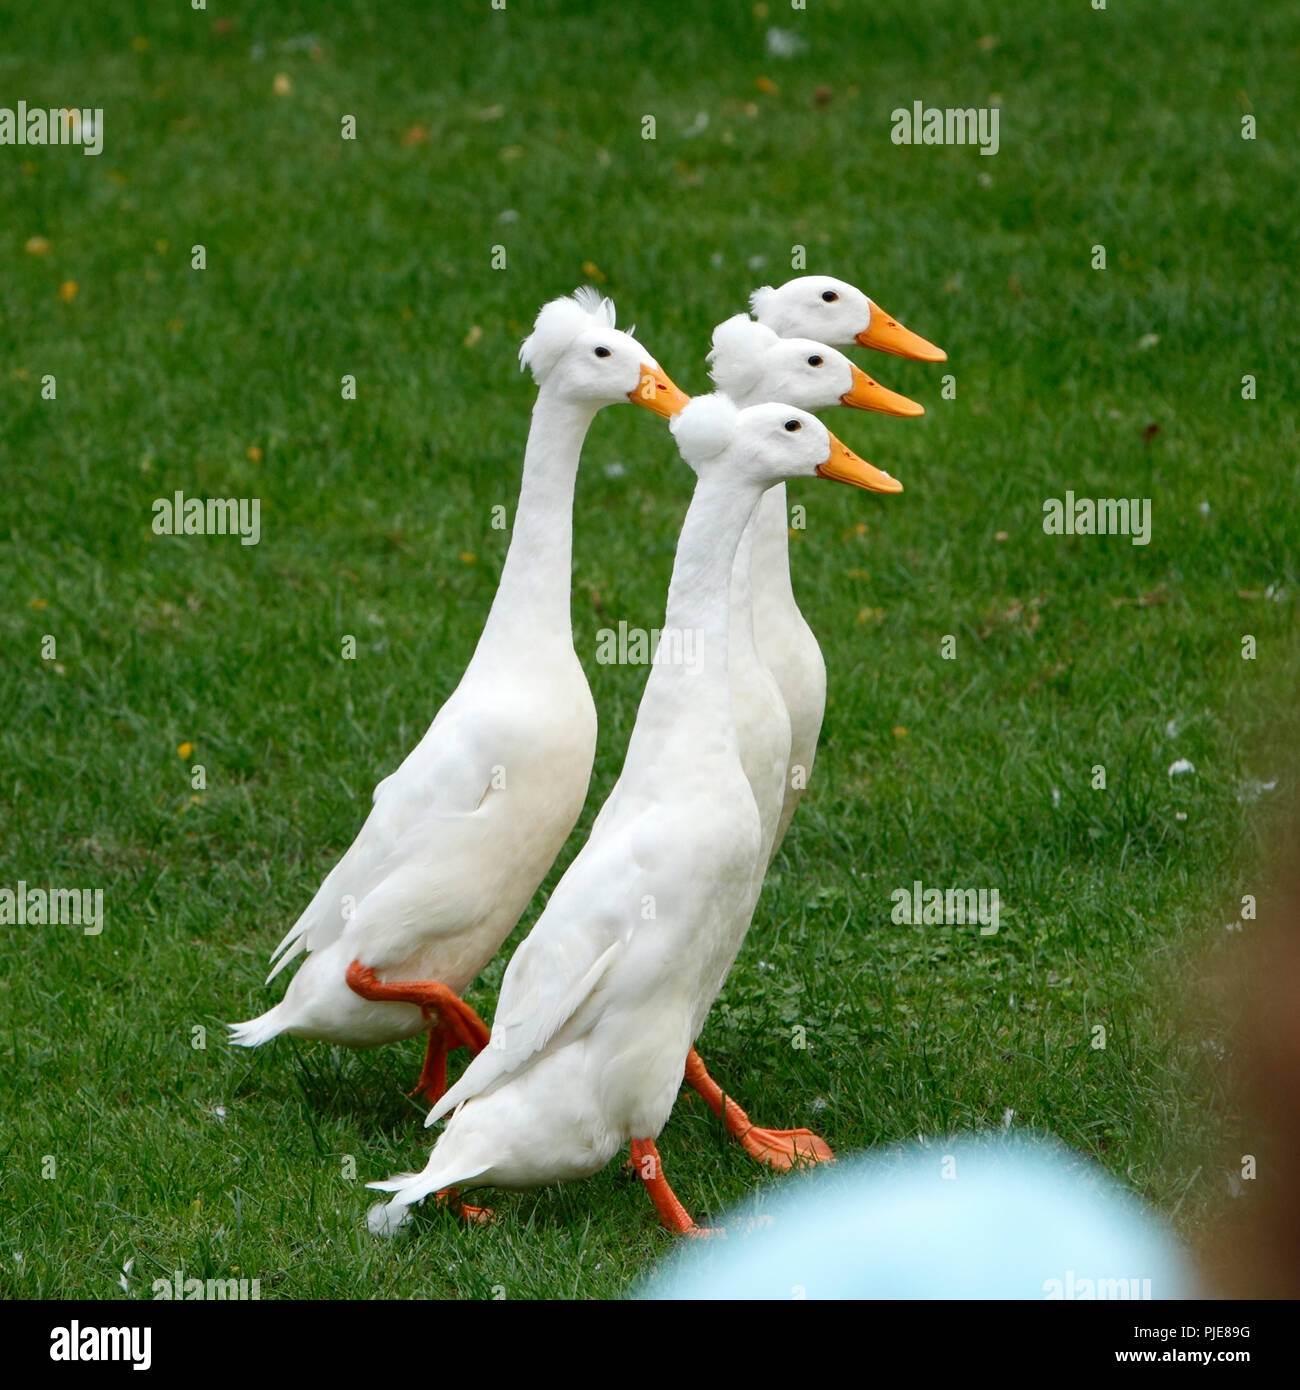 Indian running ducks Stock Photo - Alamy